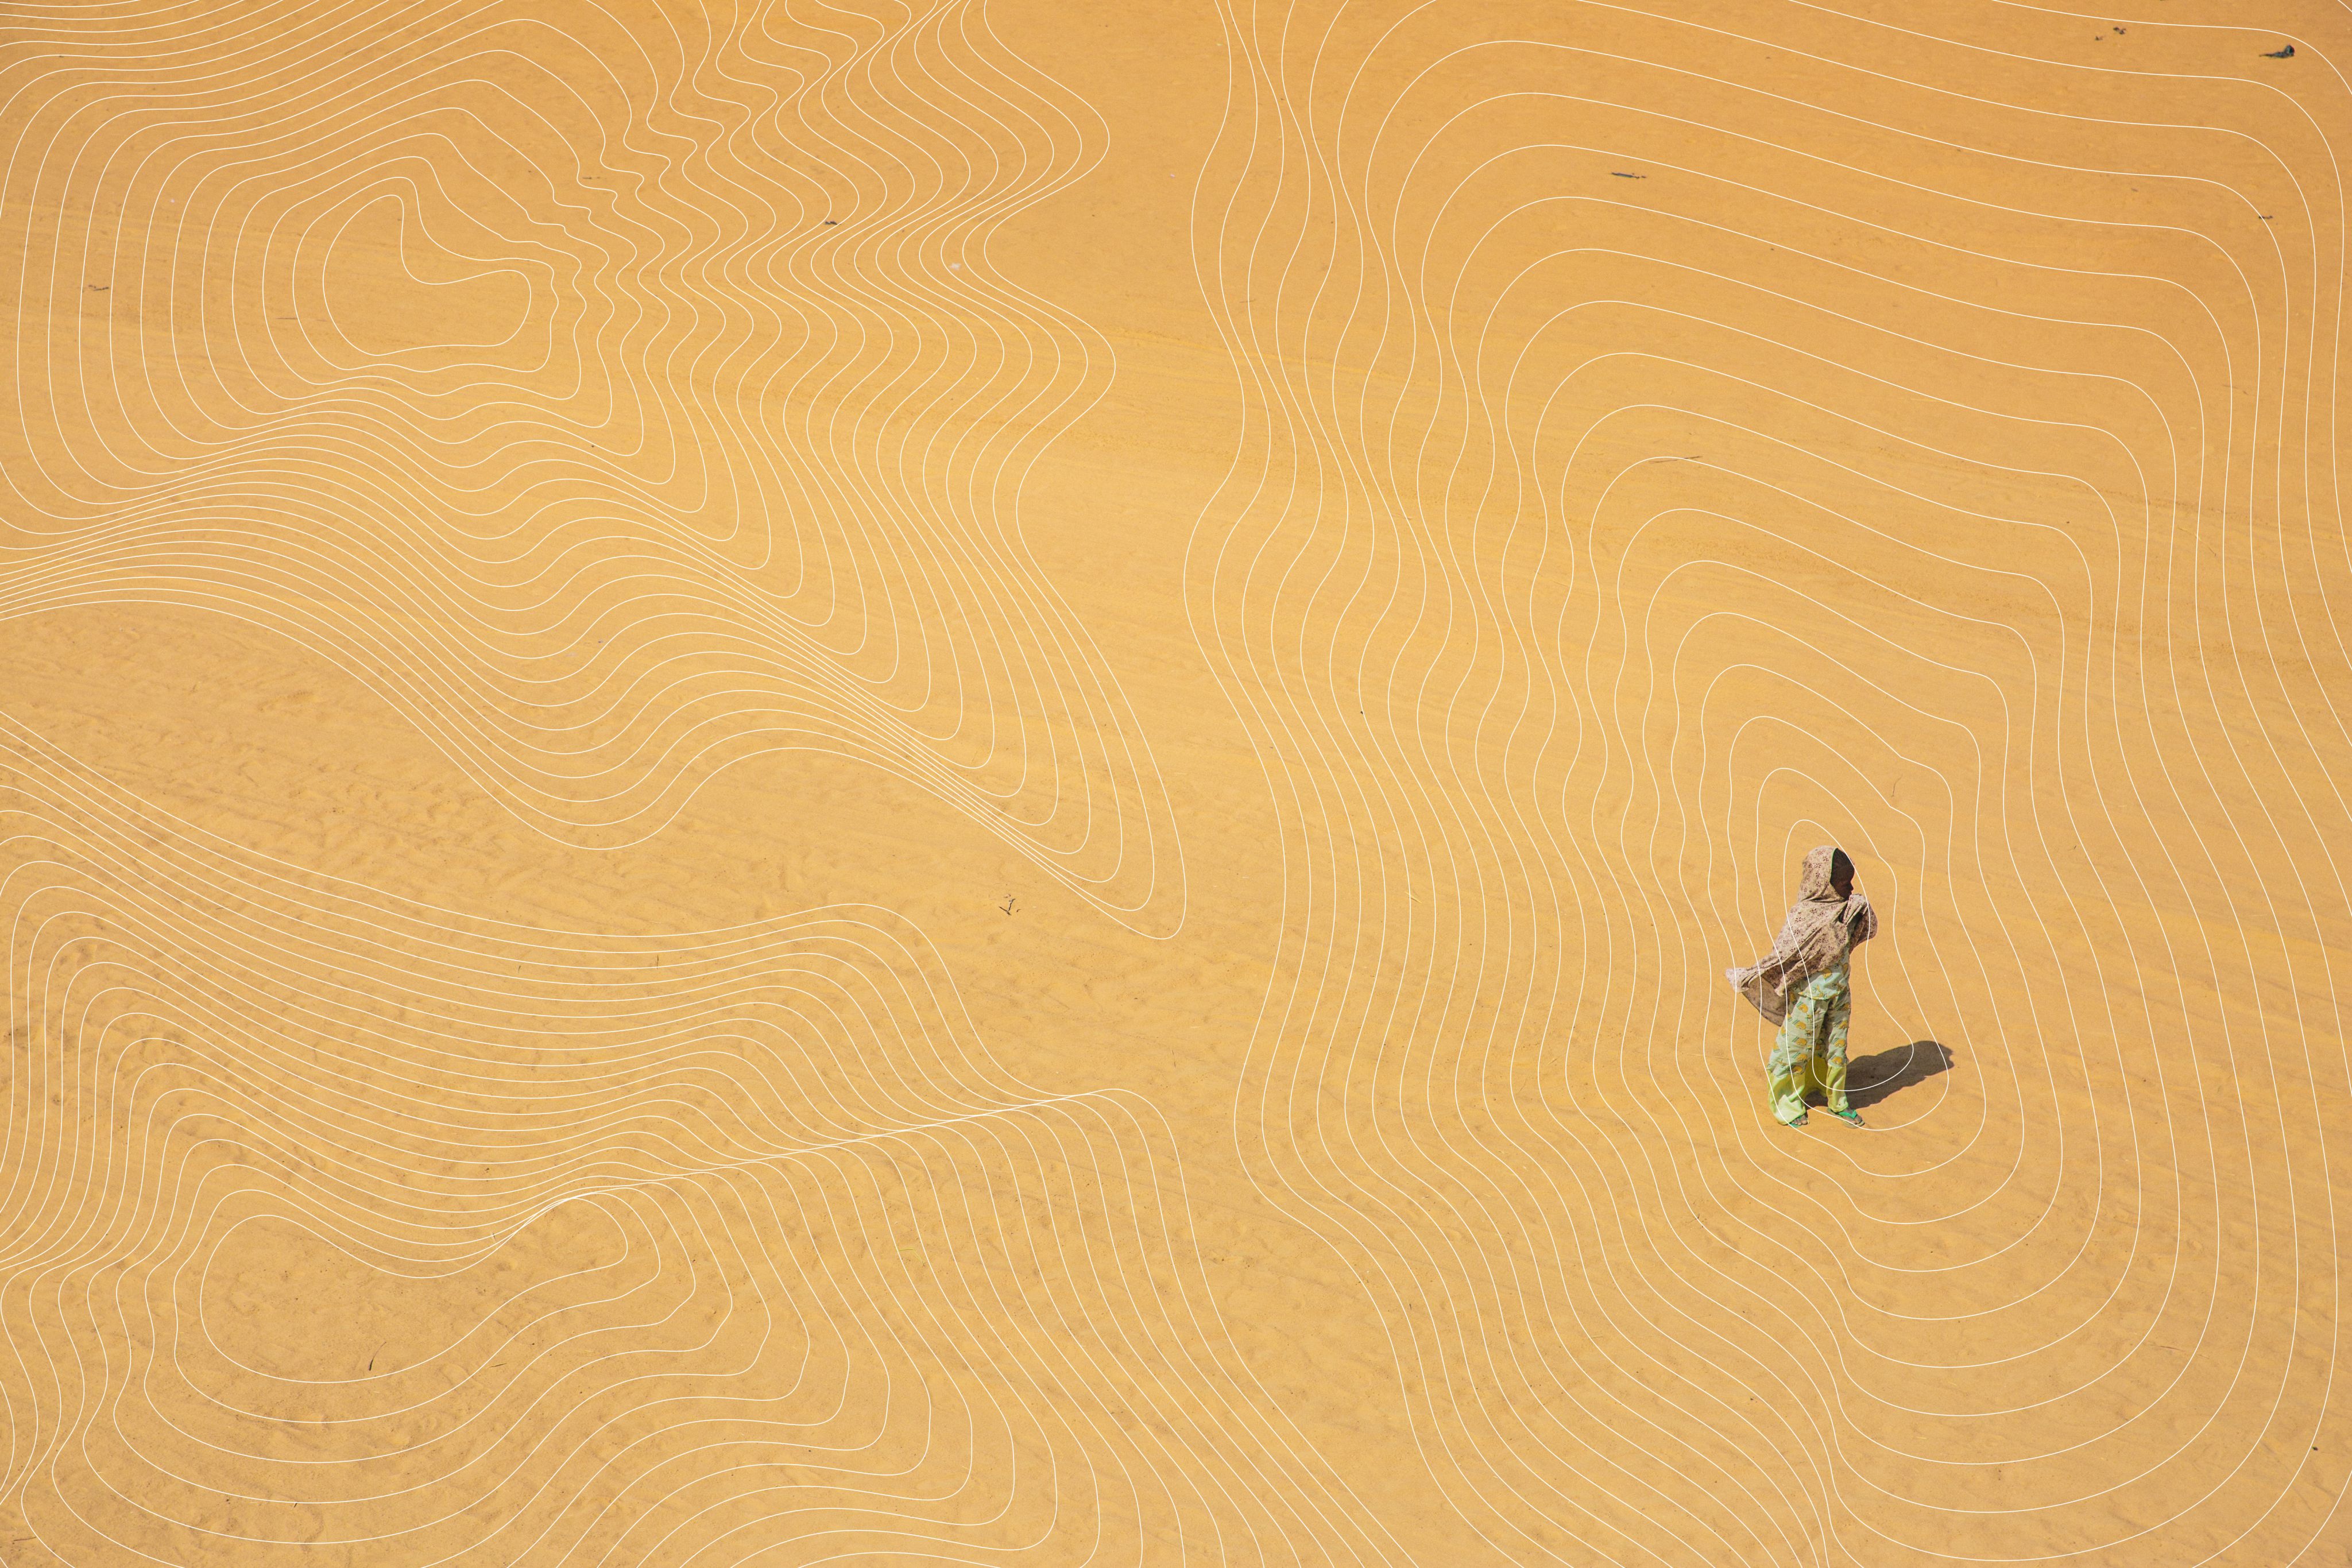 Lone human figure standing in vast golden sands near the Bakasi IDP camp in Nigeria